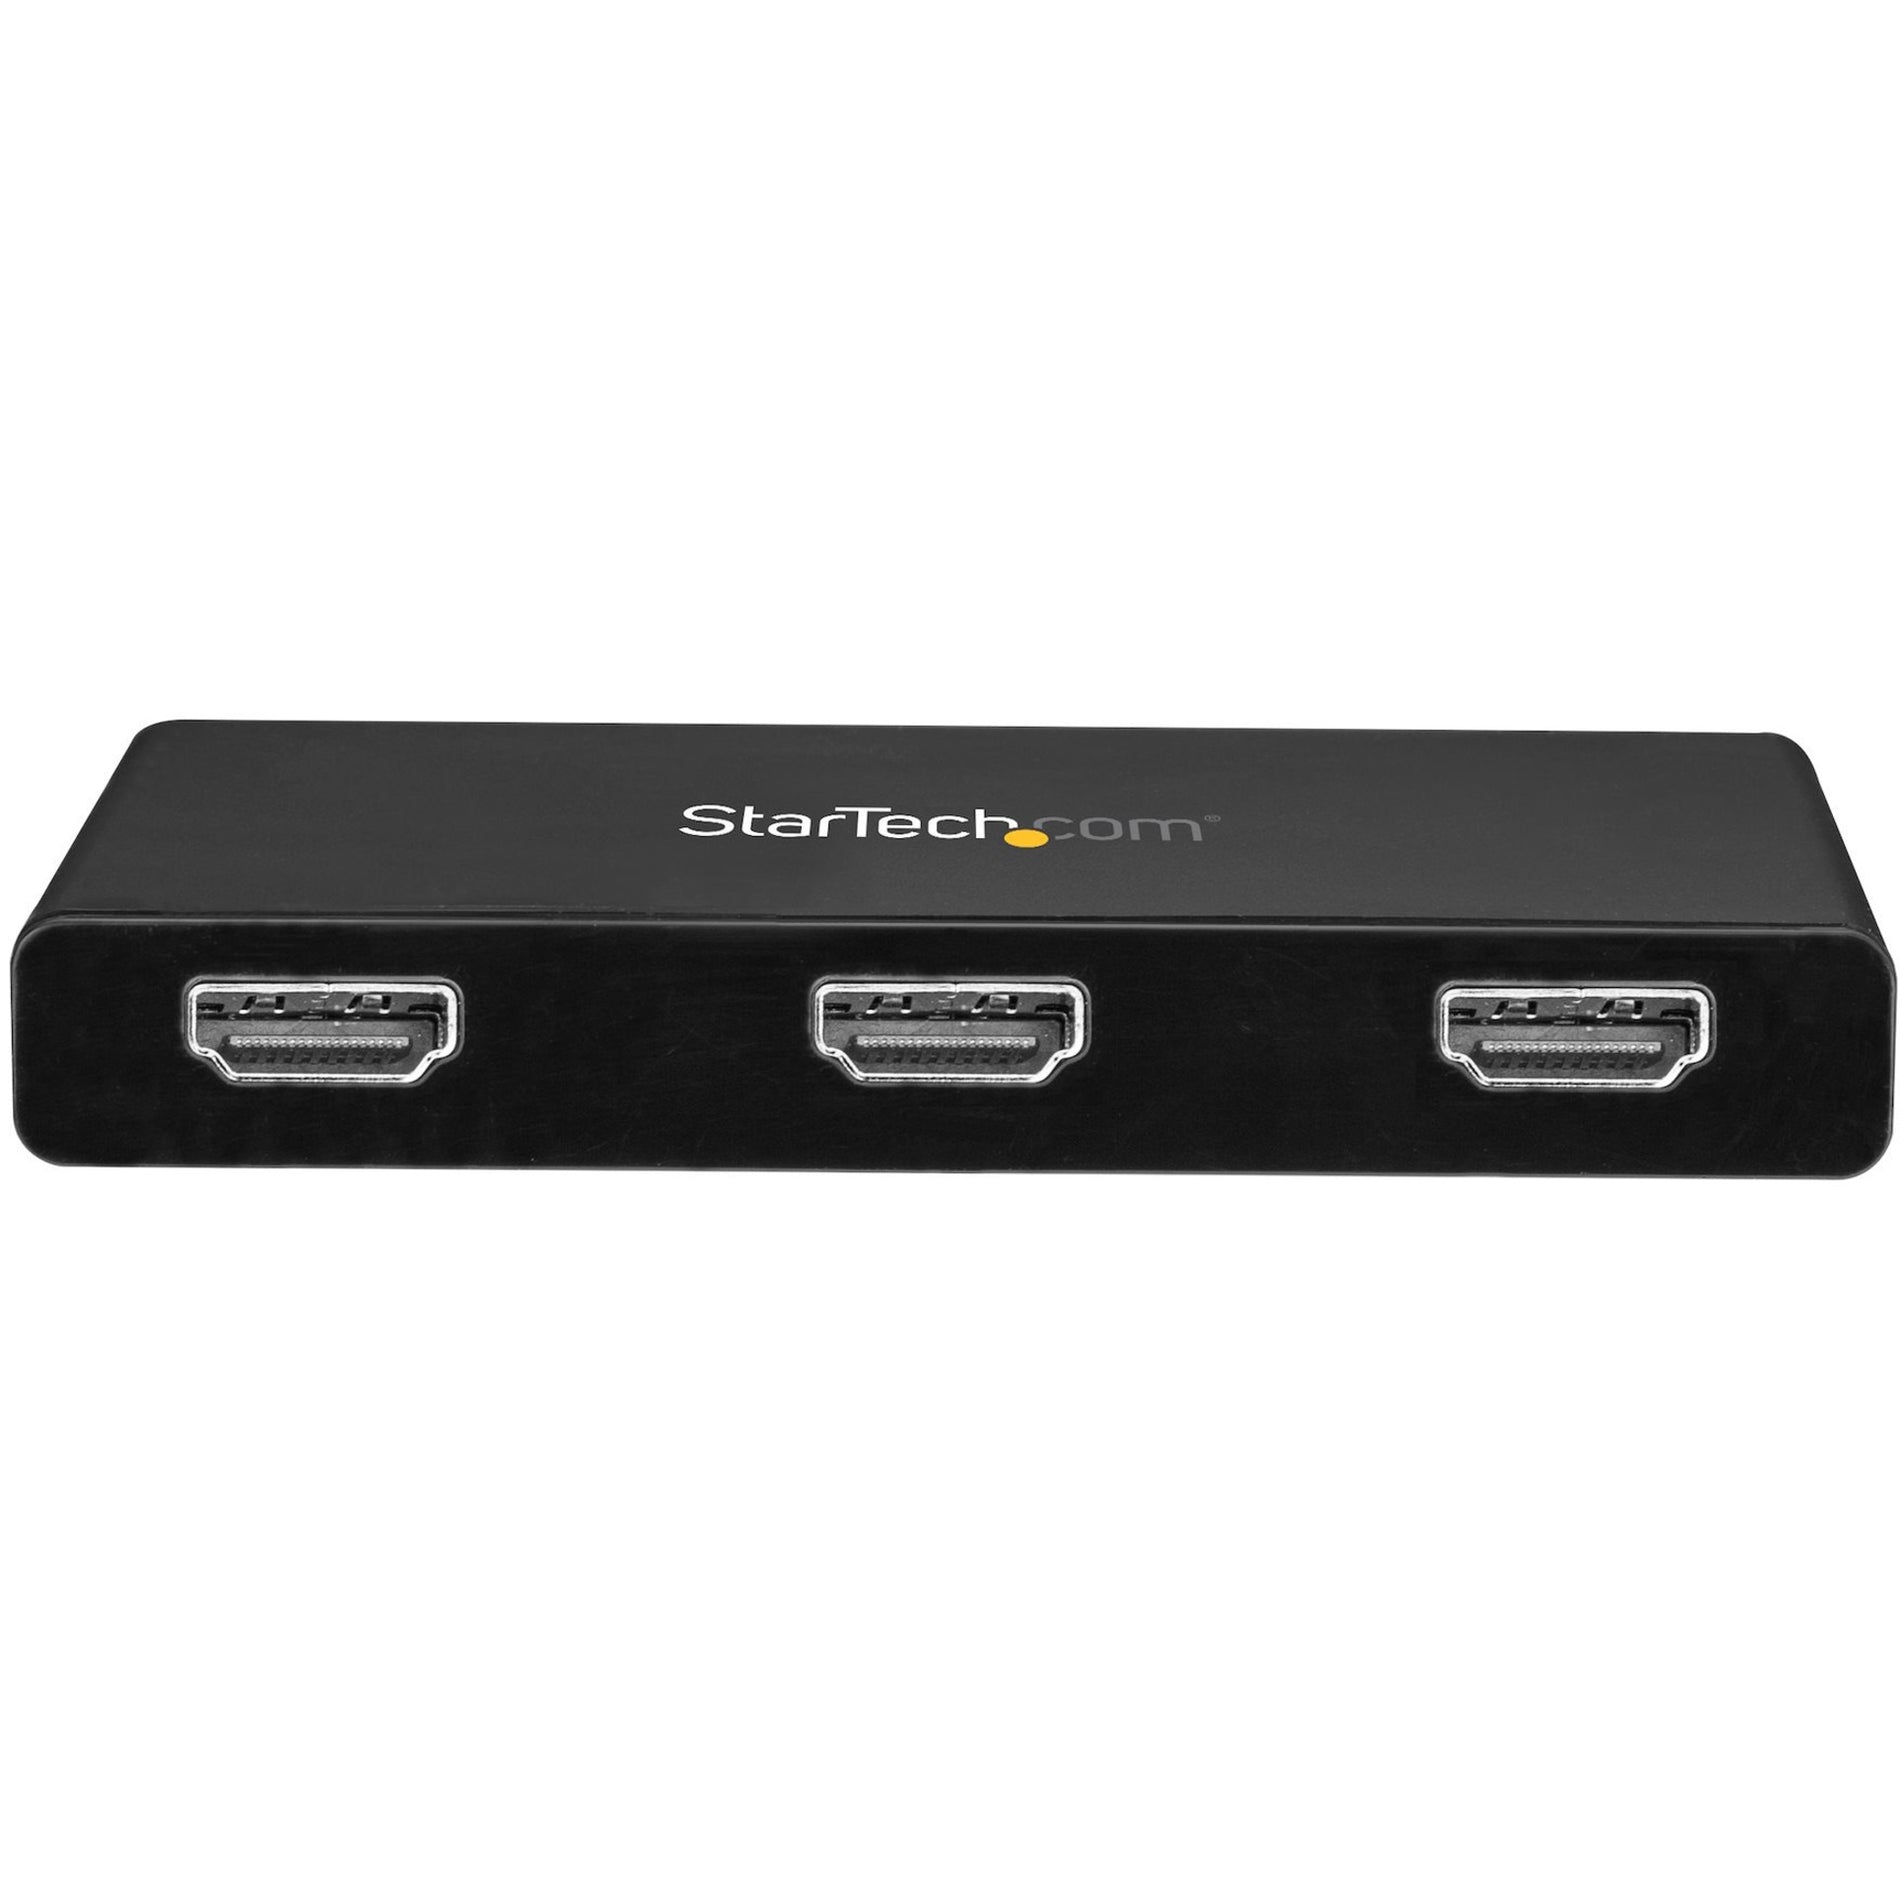 StarTech.com MSTCDP123HD USB C to HDMI Multi-Monitor Adapter - 3-Port MST Hub - USB C Multi Monitor, 4K Video, 3-Year Warranty